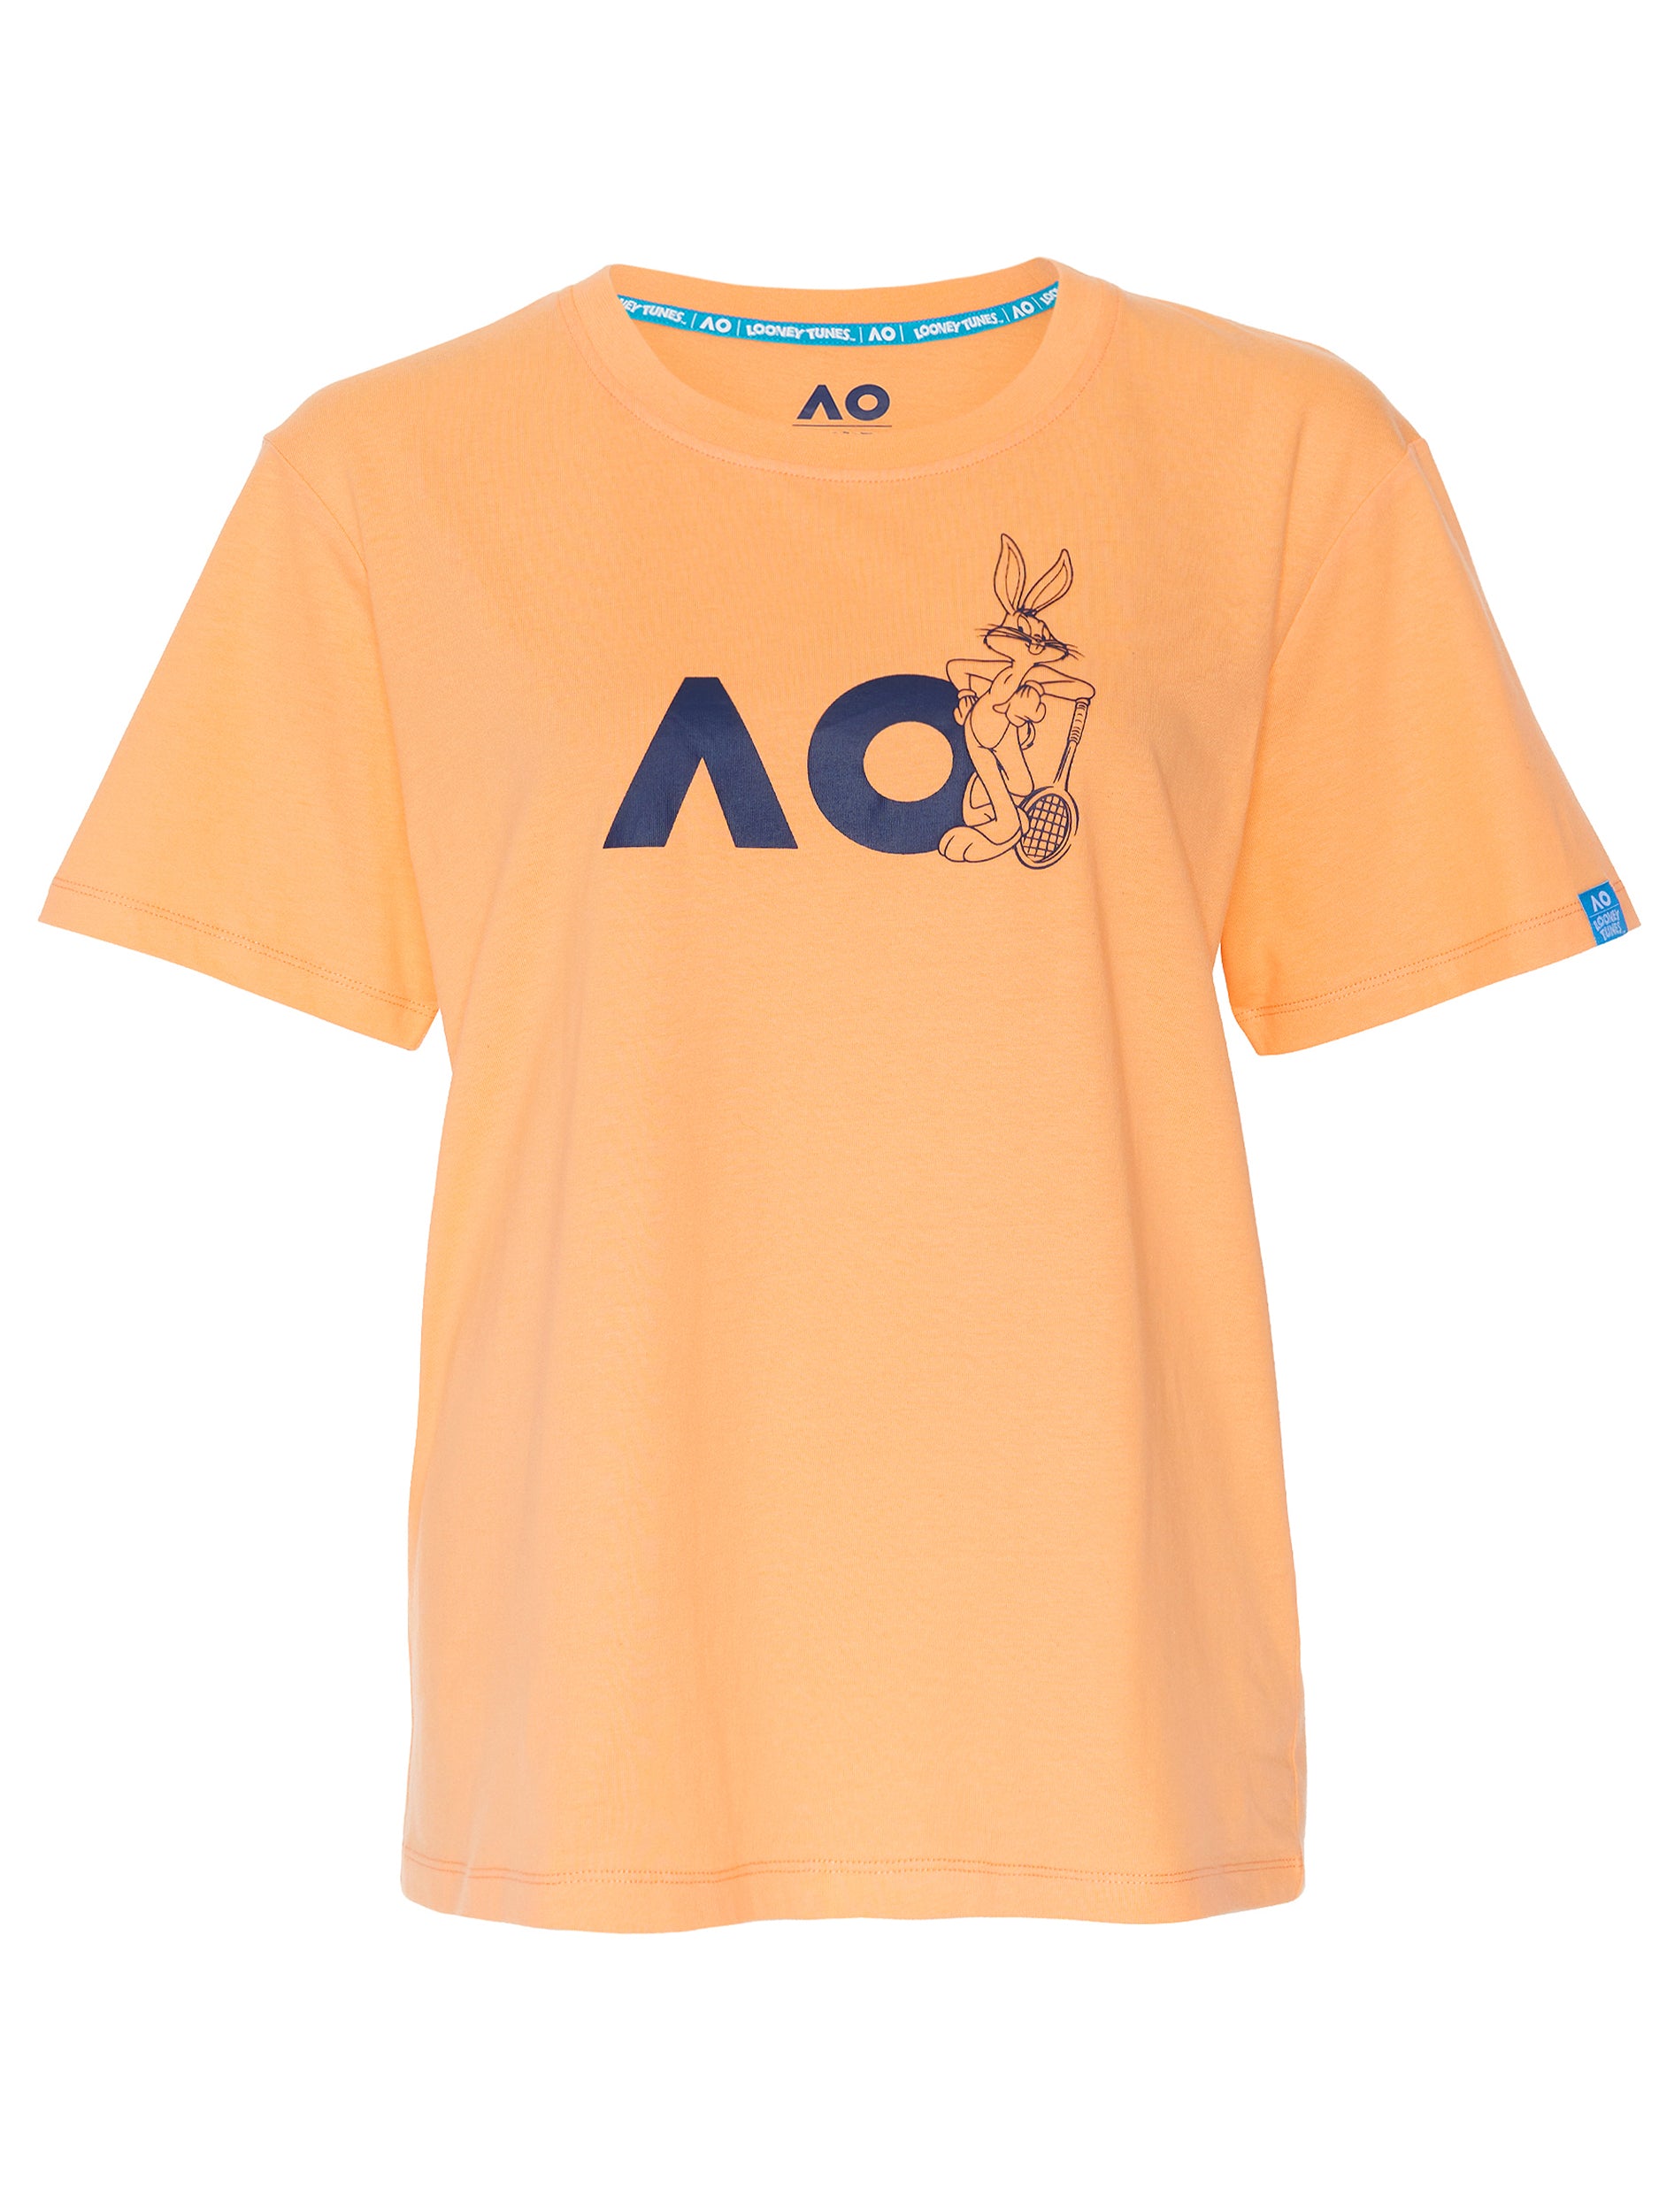 T-Shirt - Women's Bugs Bunny Print - Orange